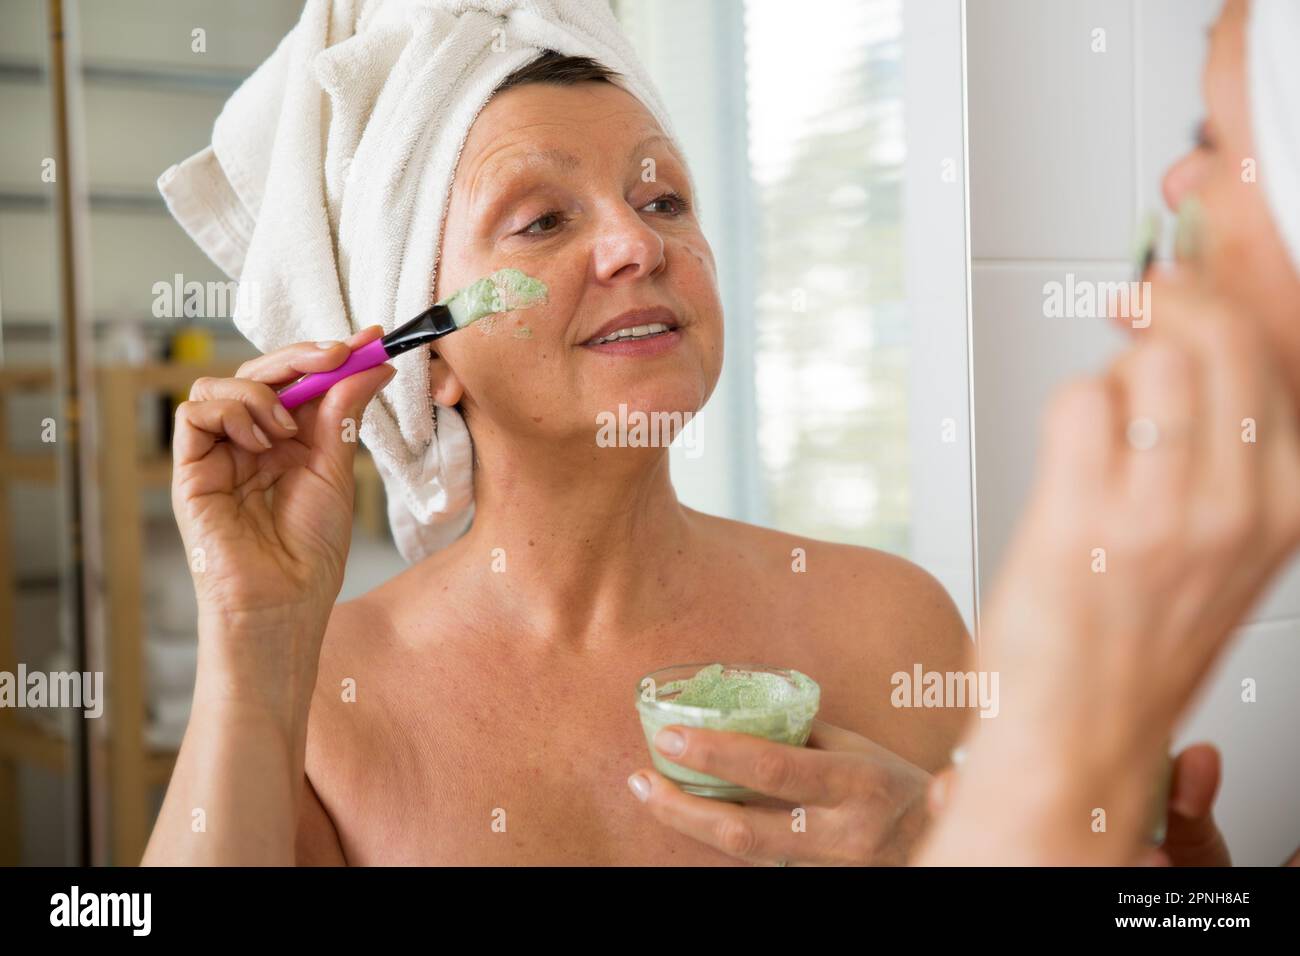 Cepillo facial exfoliante fotografías e imágenes de alta resolución - Página 2